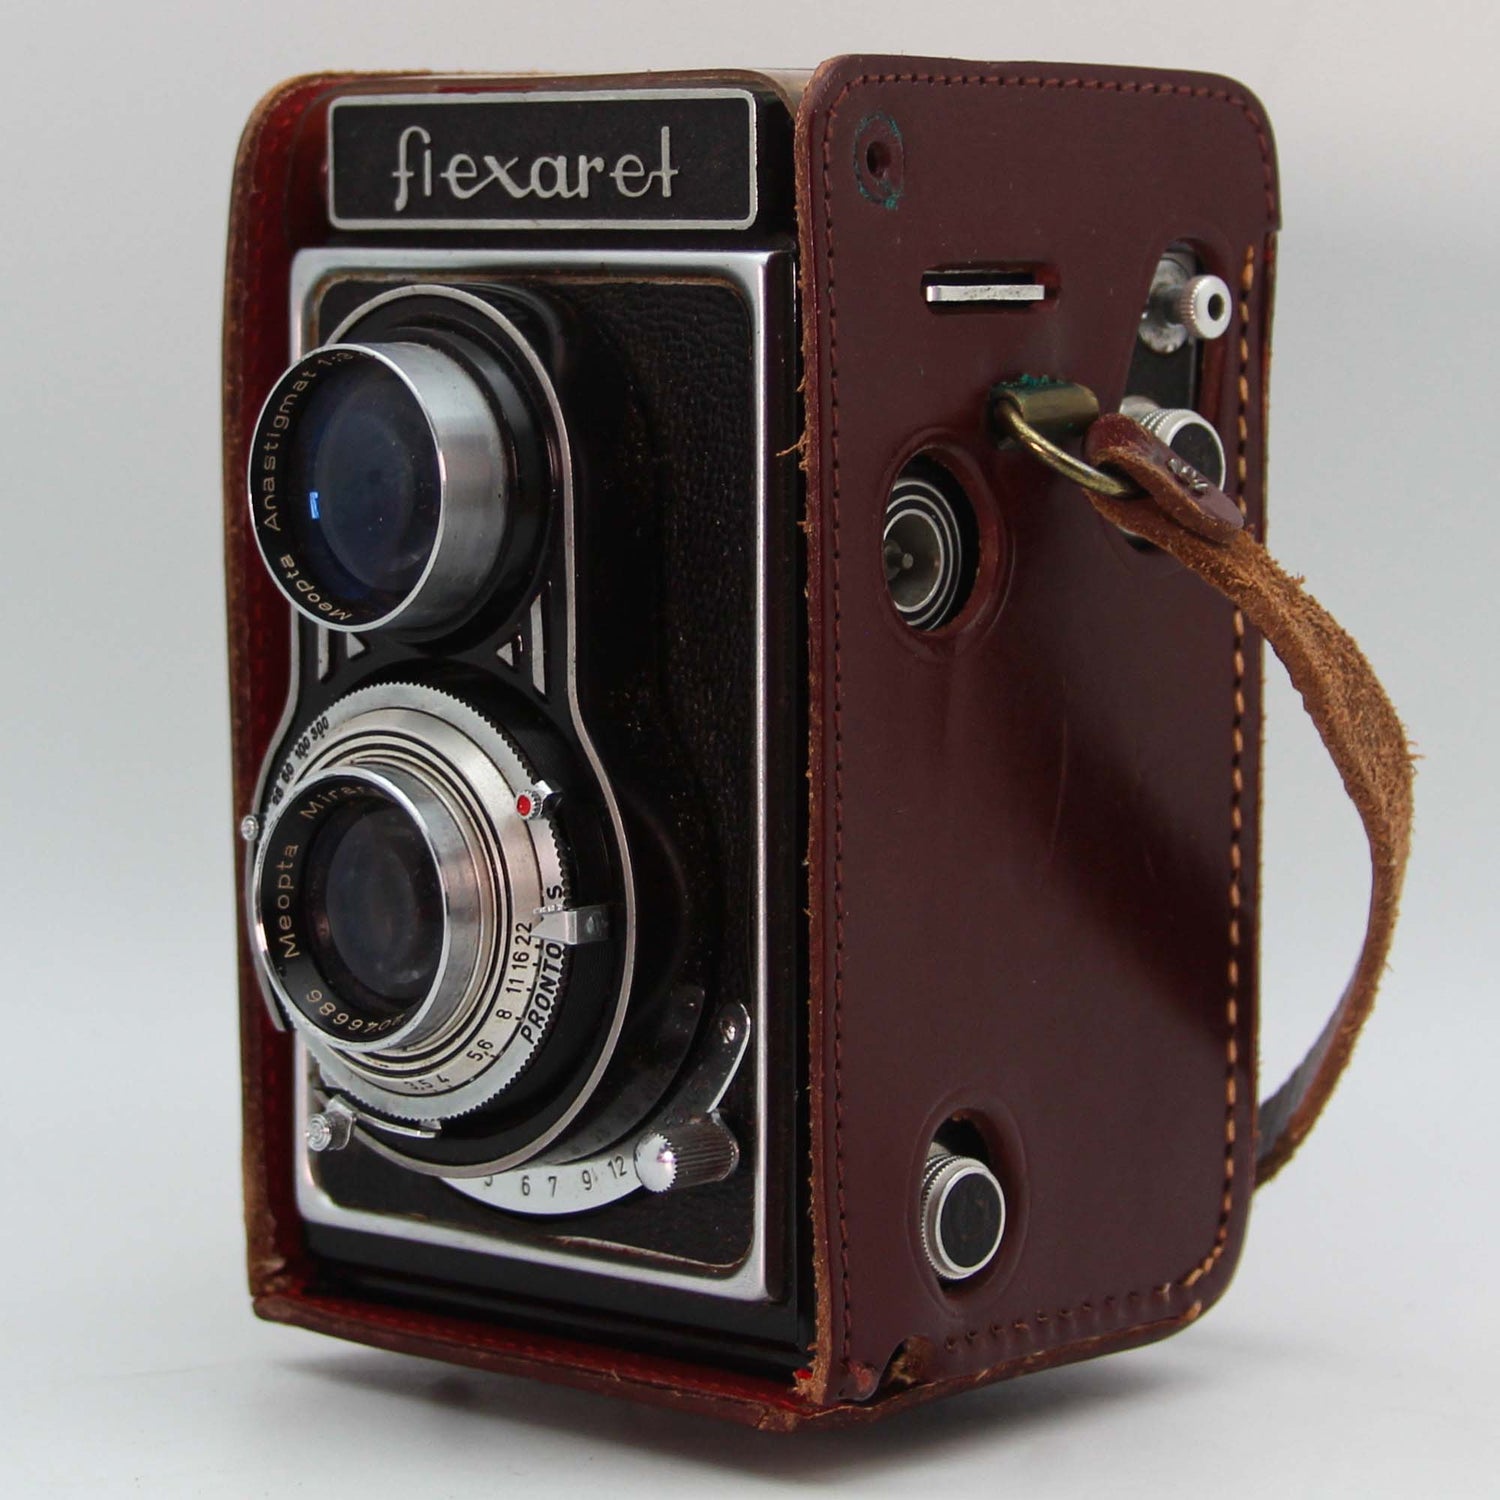 Flexaret Camera Meopta Side View